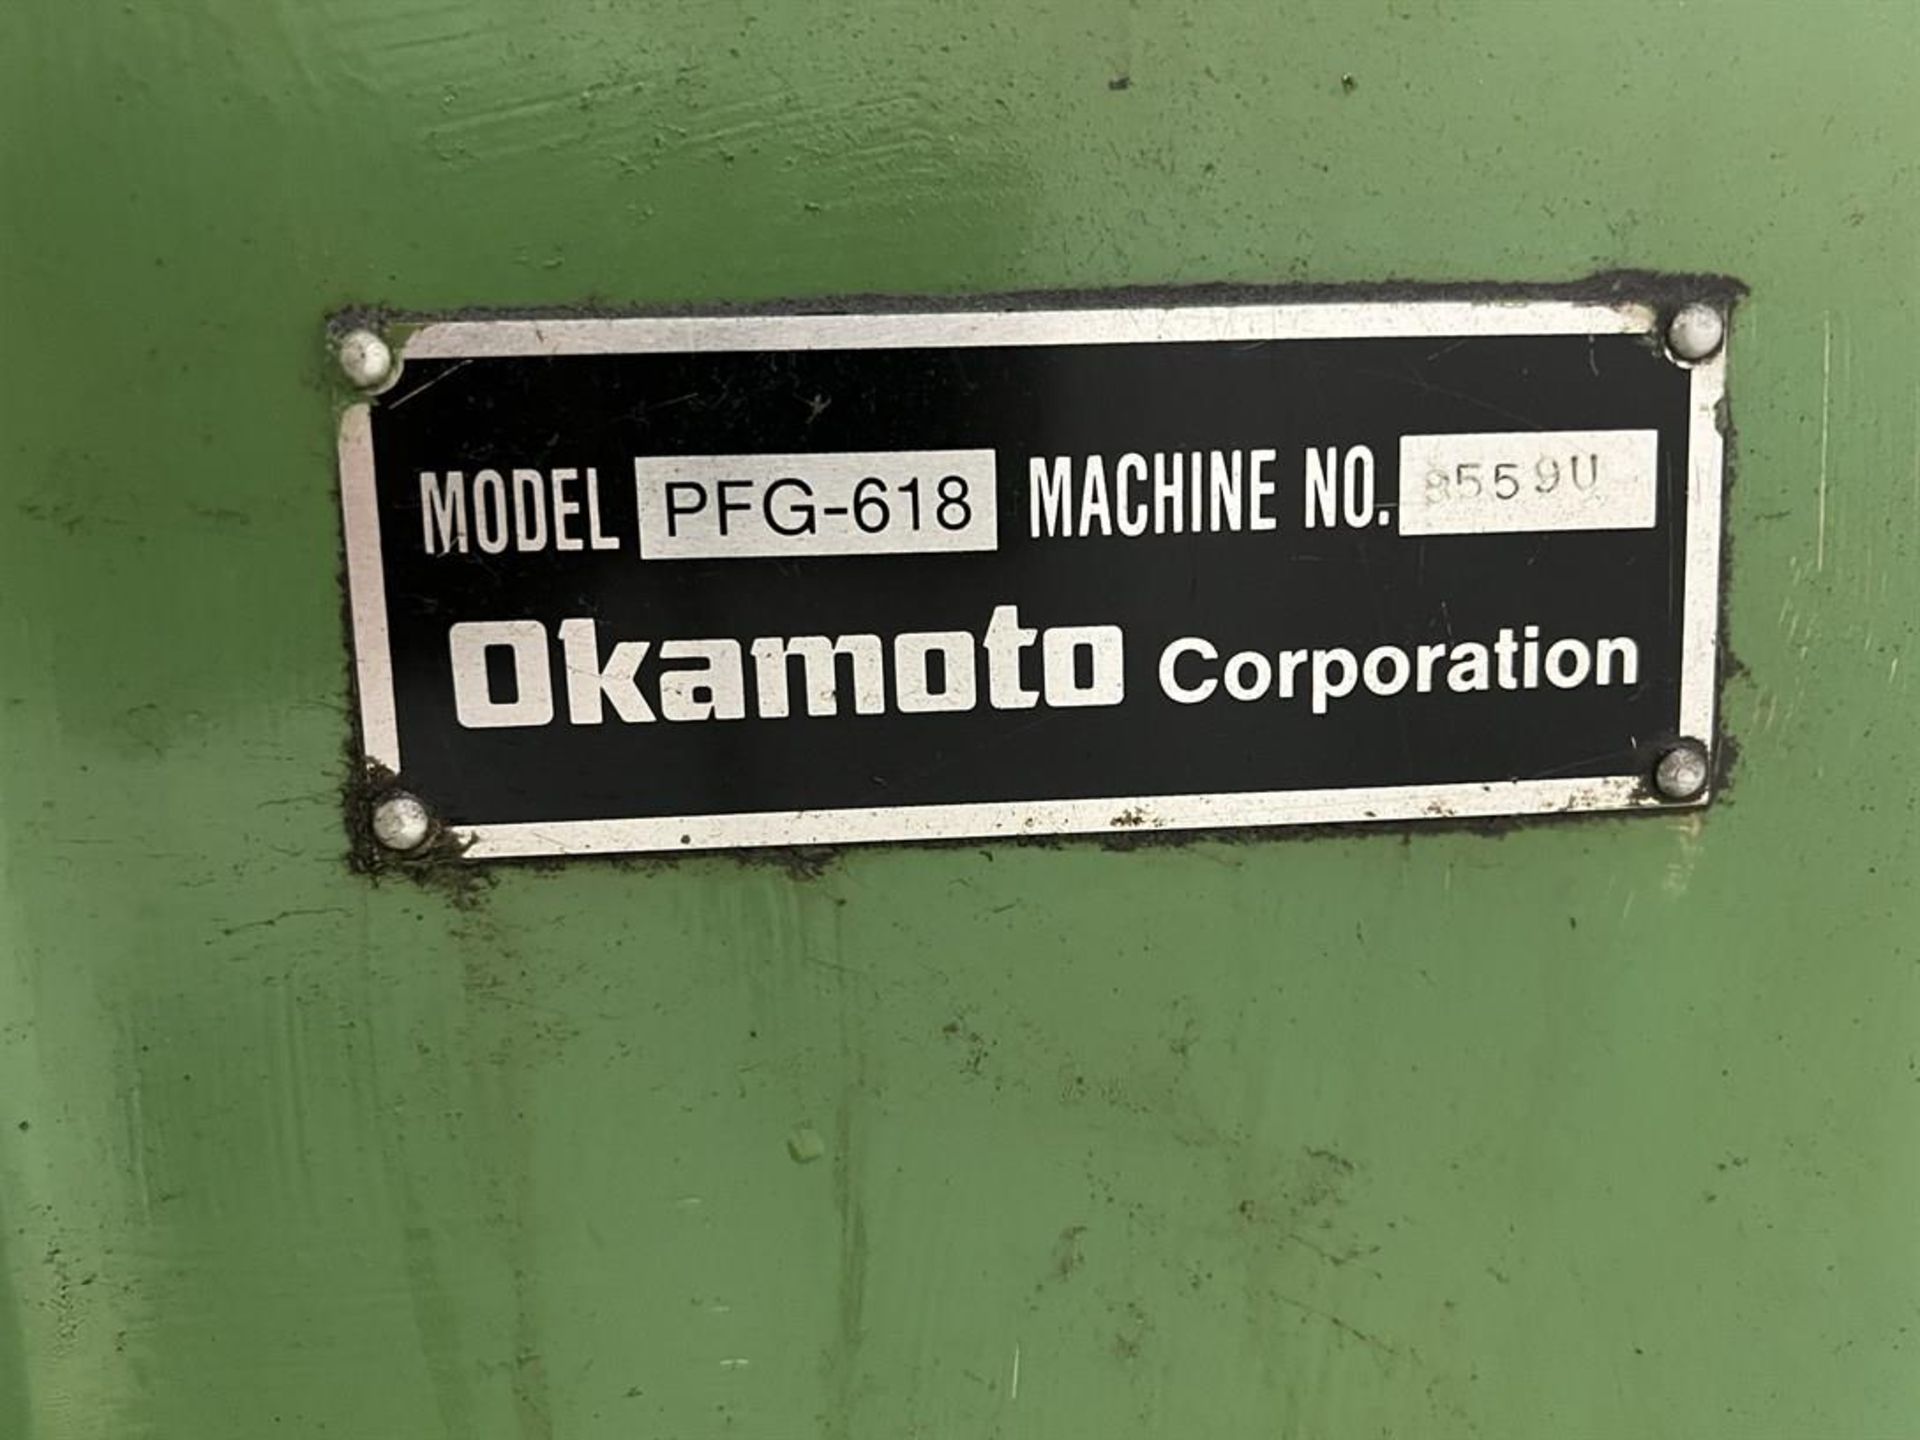 OKAMOTO PFG-618 Hand Feed Surface Grinder, s/n 8559U, w/ 18”x 6” Magnetic Chuck - Image 6 of 6